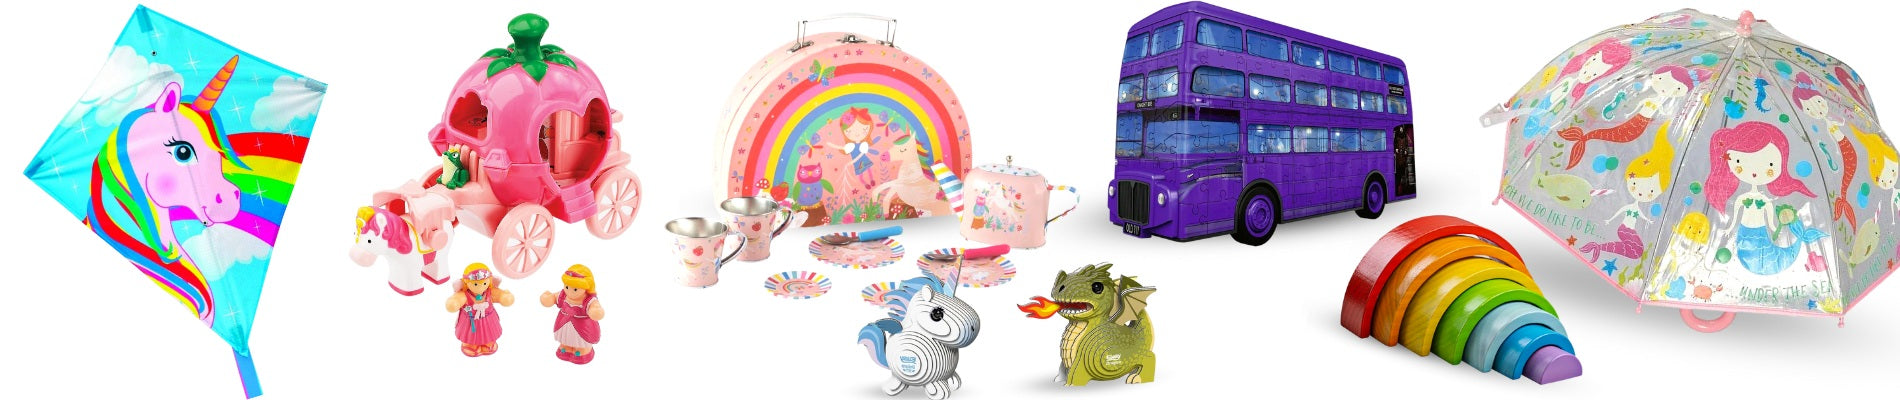 Toys with a 'fantastical' theme: a unicorn umbrella, princess carriage, unicorn, dragon, Harry potter bus and rainbow.